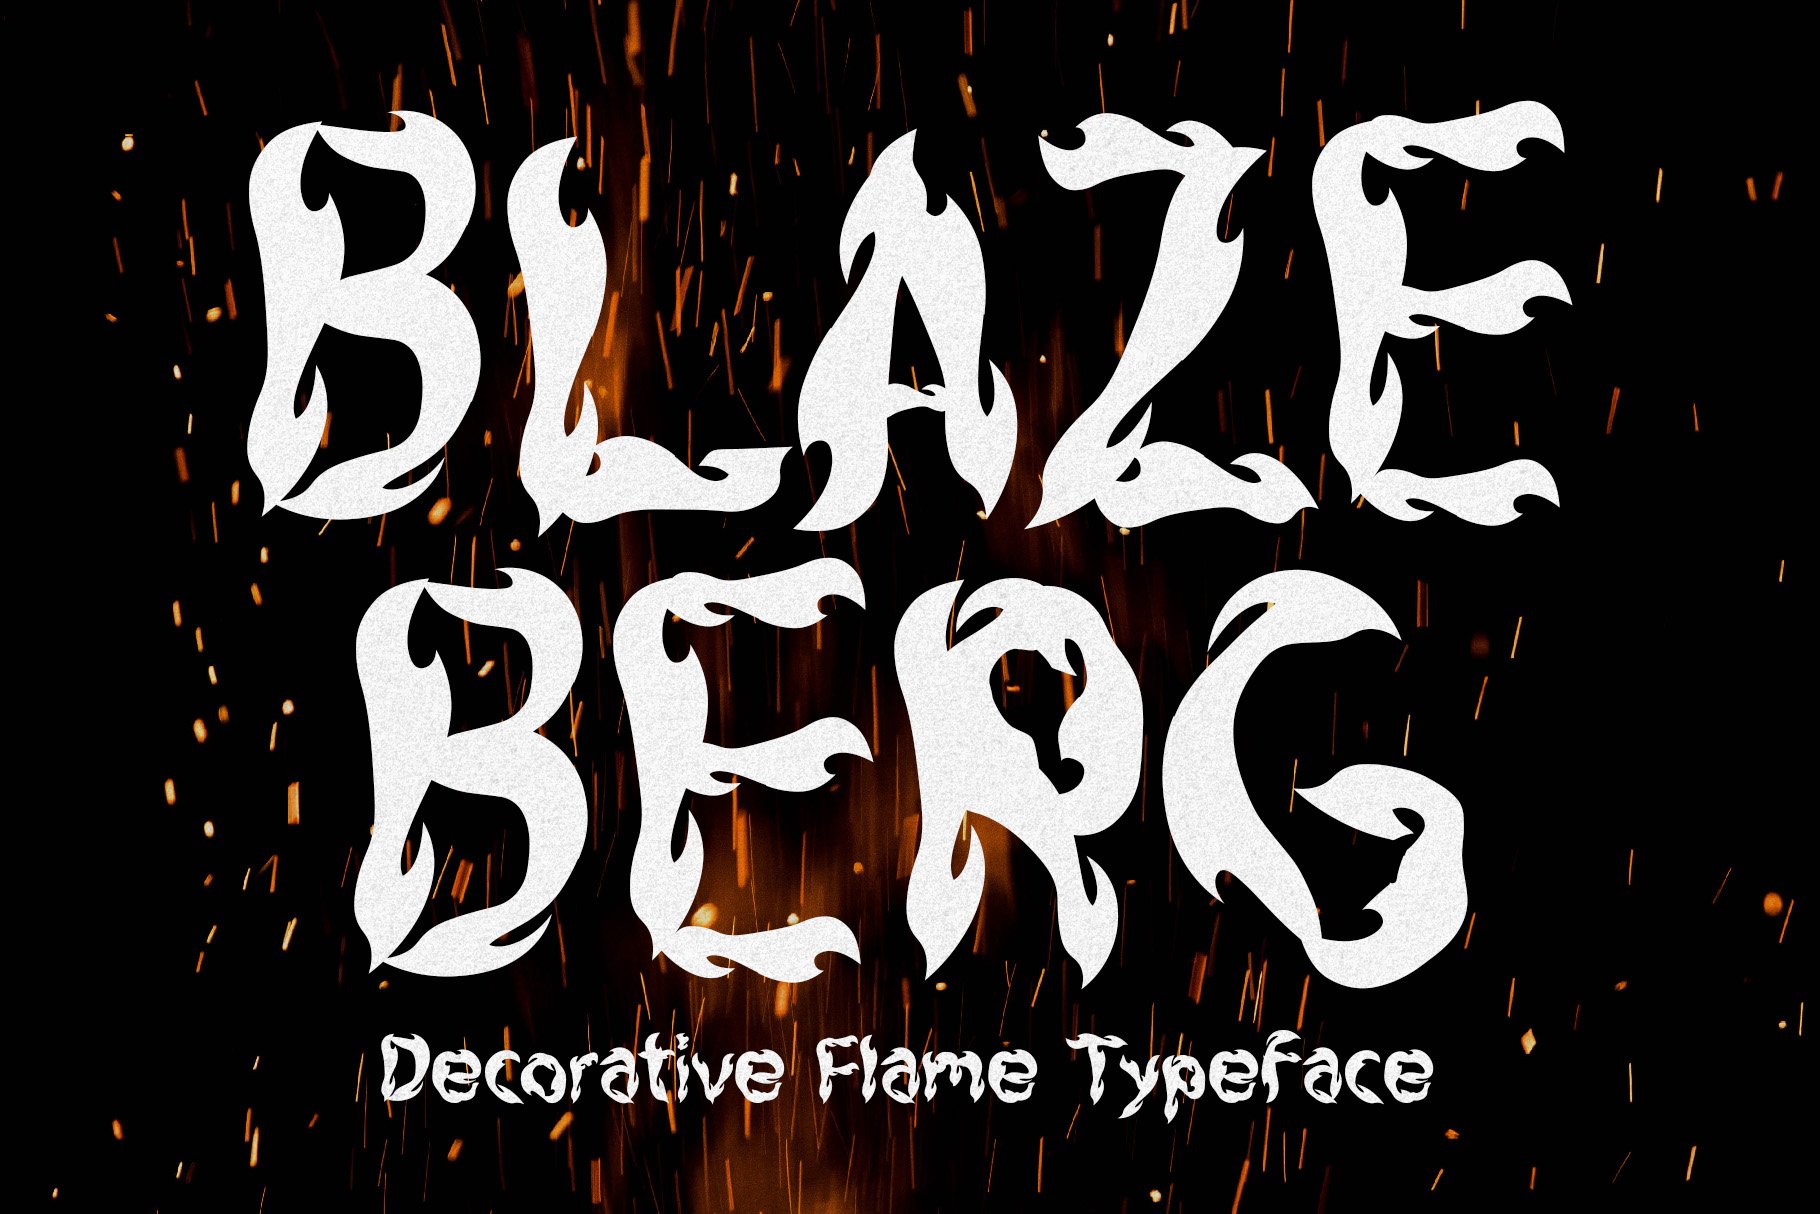 Blazeberg - Flame Typeface cover image.